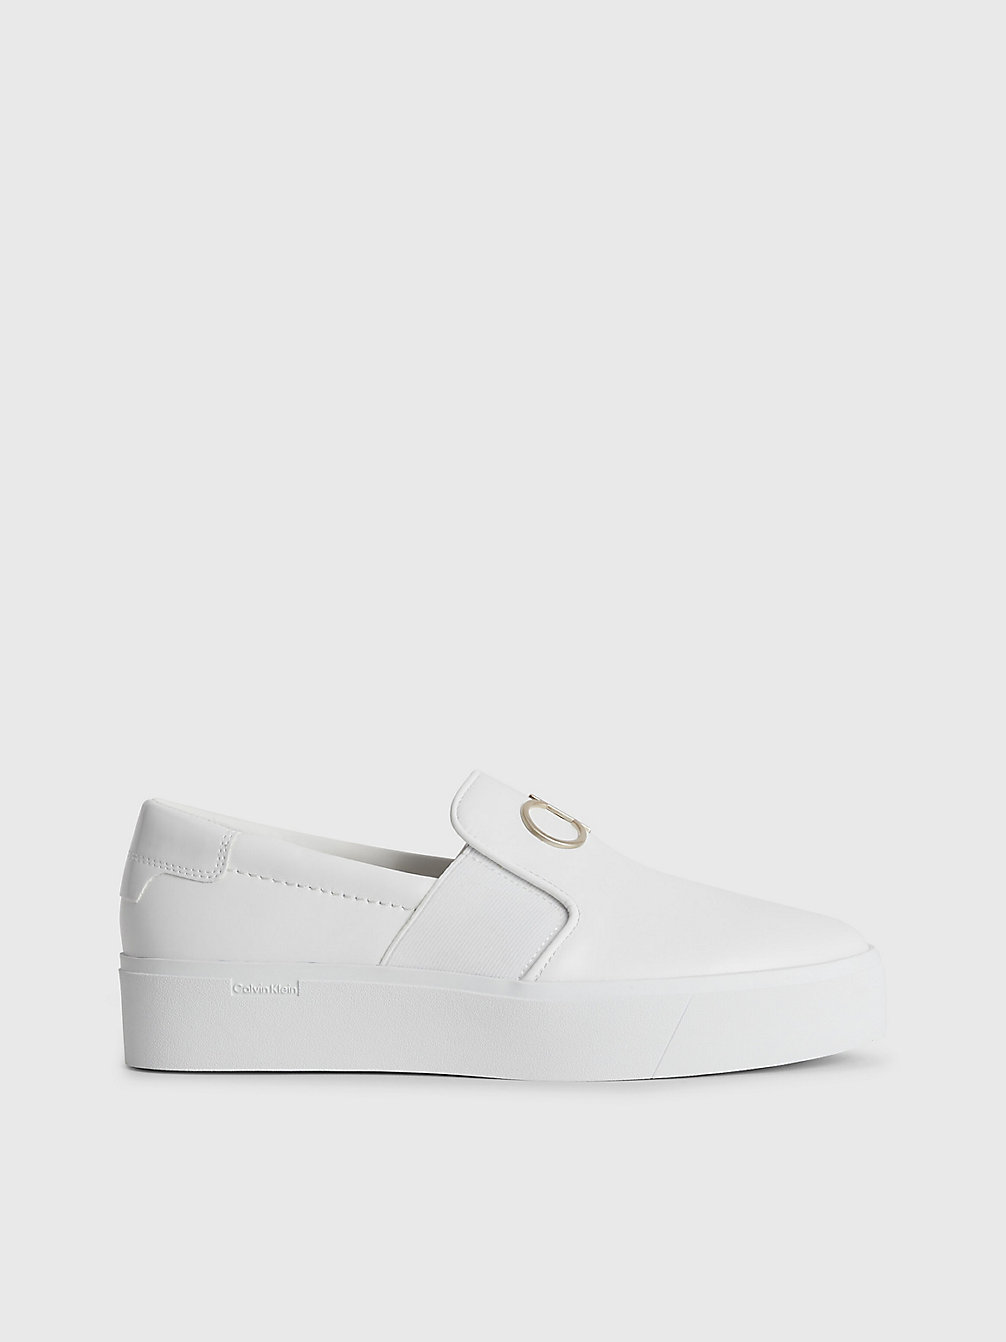 BRIGHT WHITE Chaussures À Enfiler À Plateforme En Cuir undefined femmes Calvin Klein